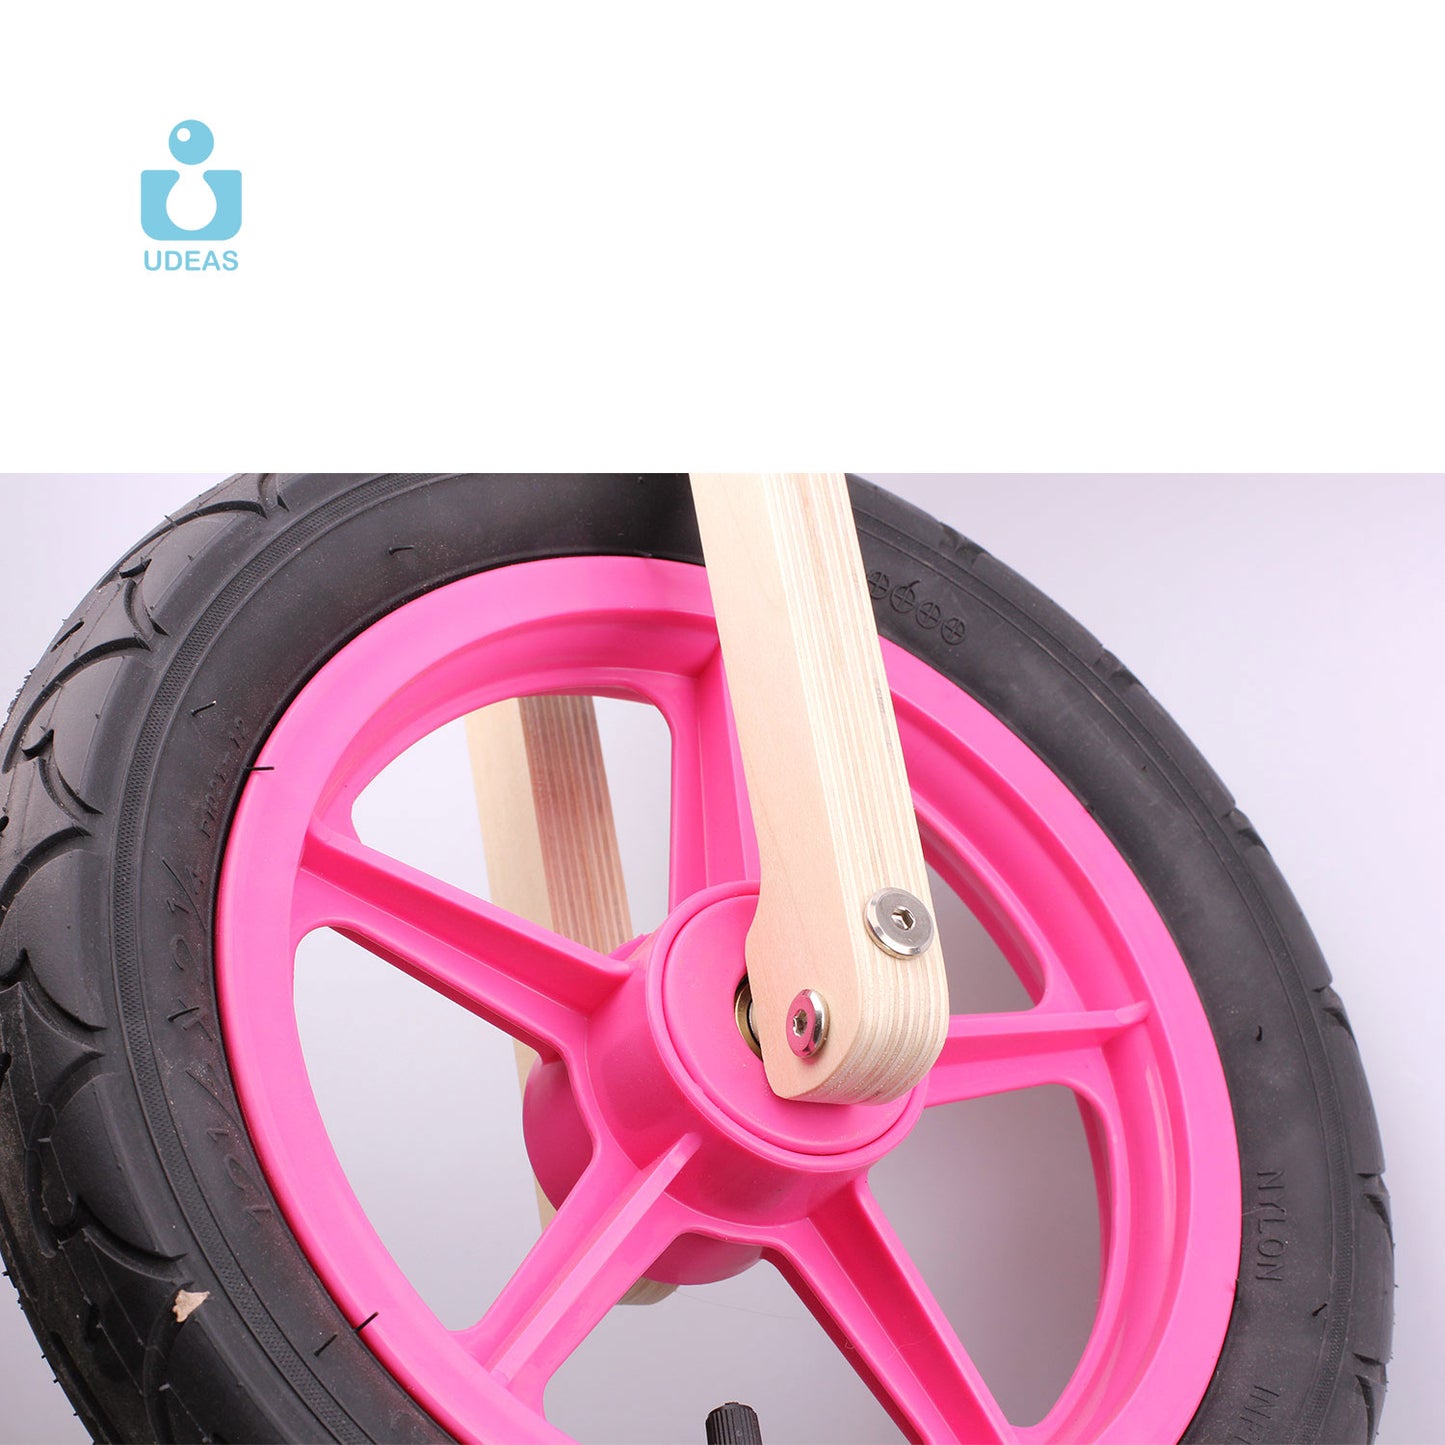 Udeas Spinning Balance Bike Pink Flower EVA Tire